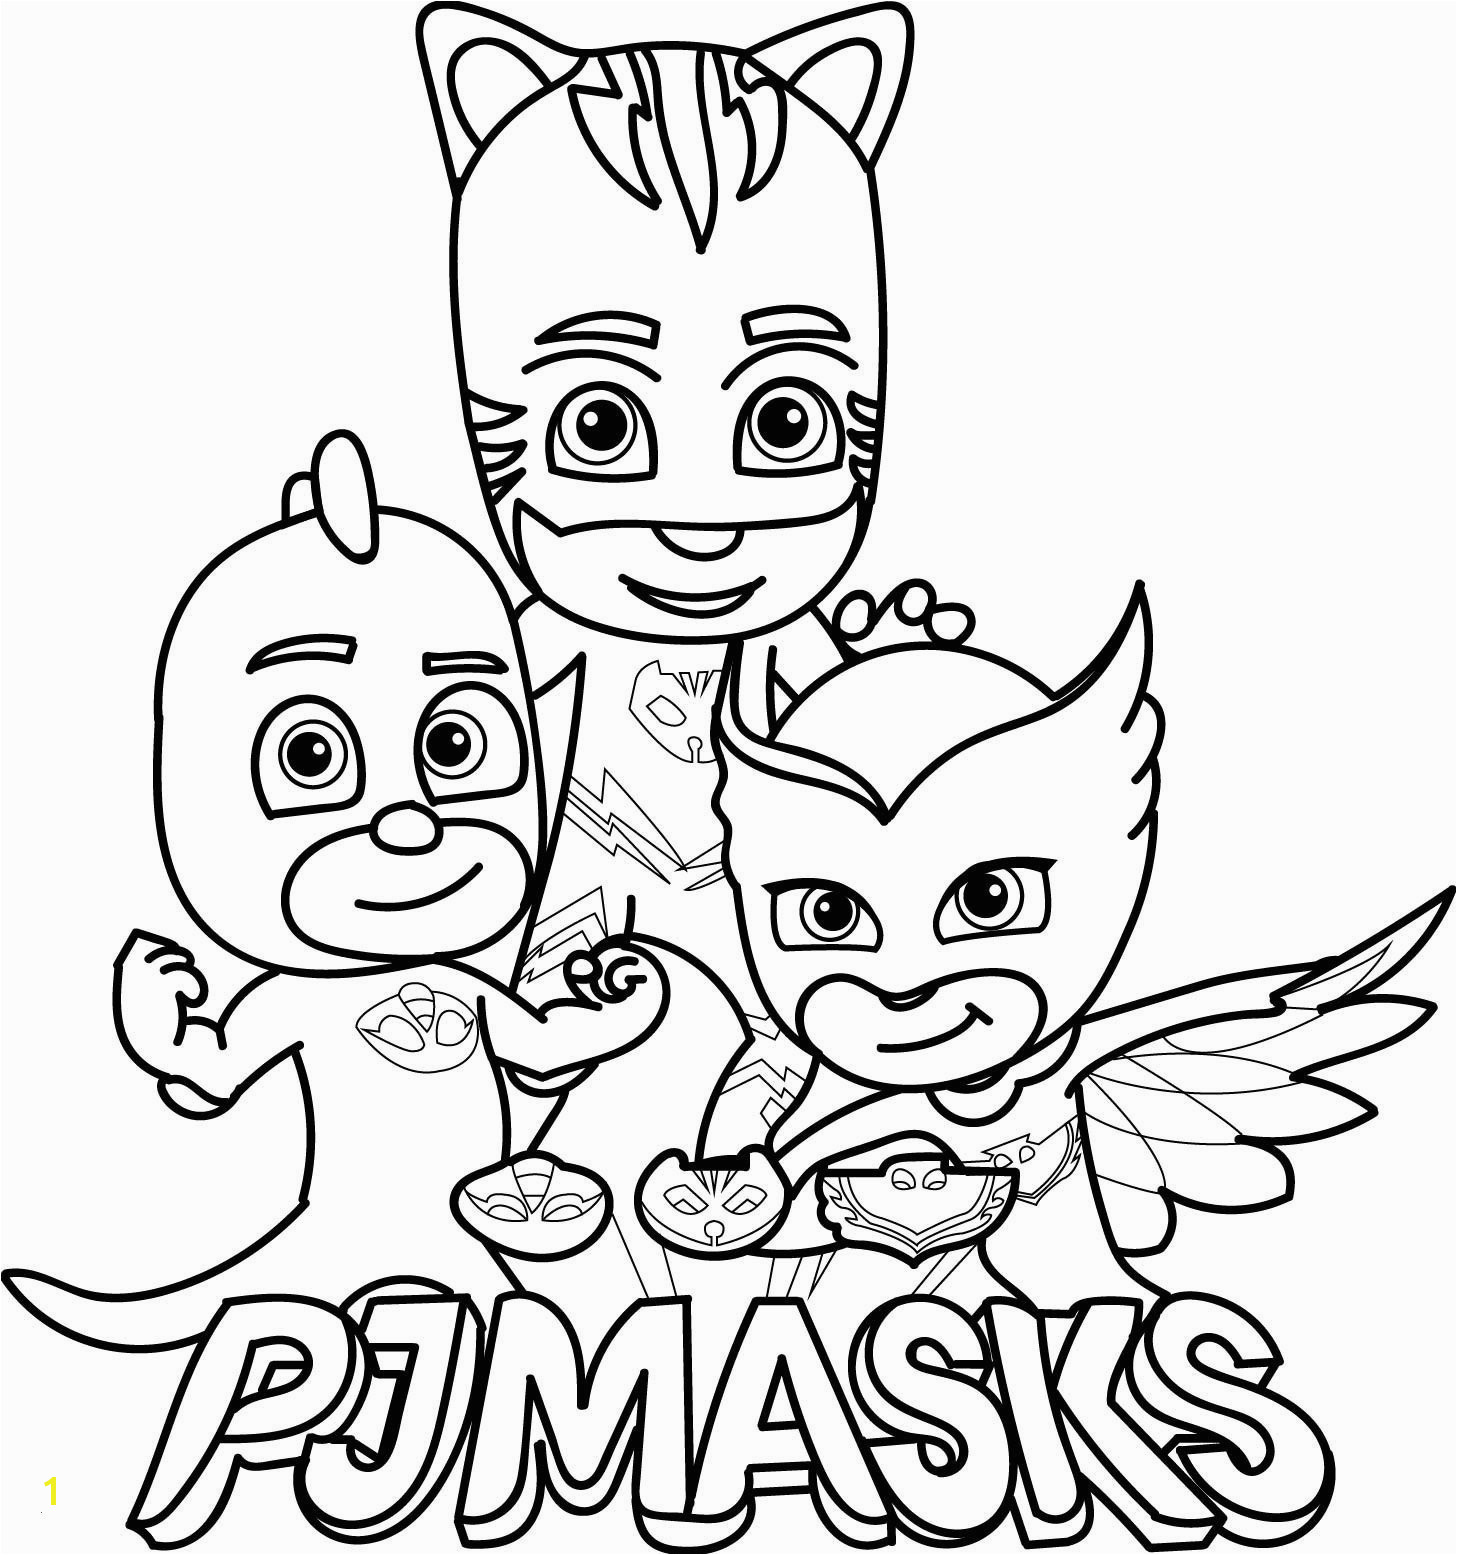 Coloring Pages Of Pj Masks Ausmalbilder Pj Masks Einzigartig 12 Owlette Coloring Page